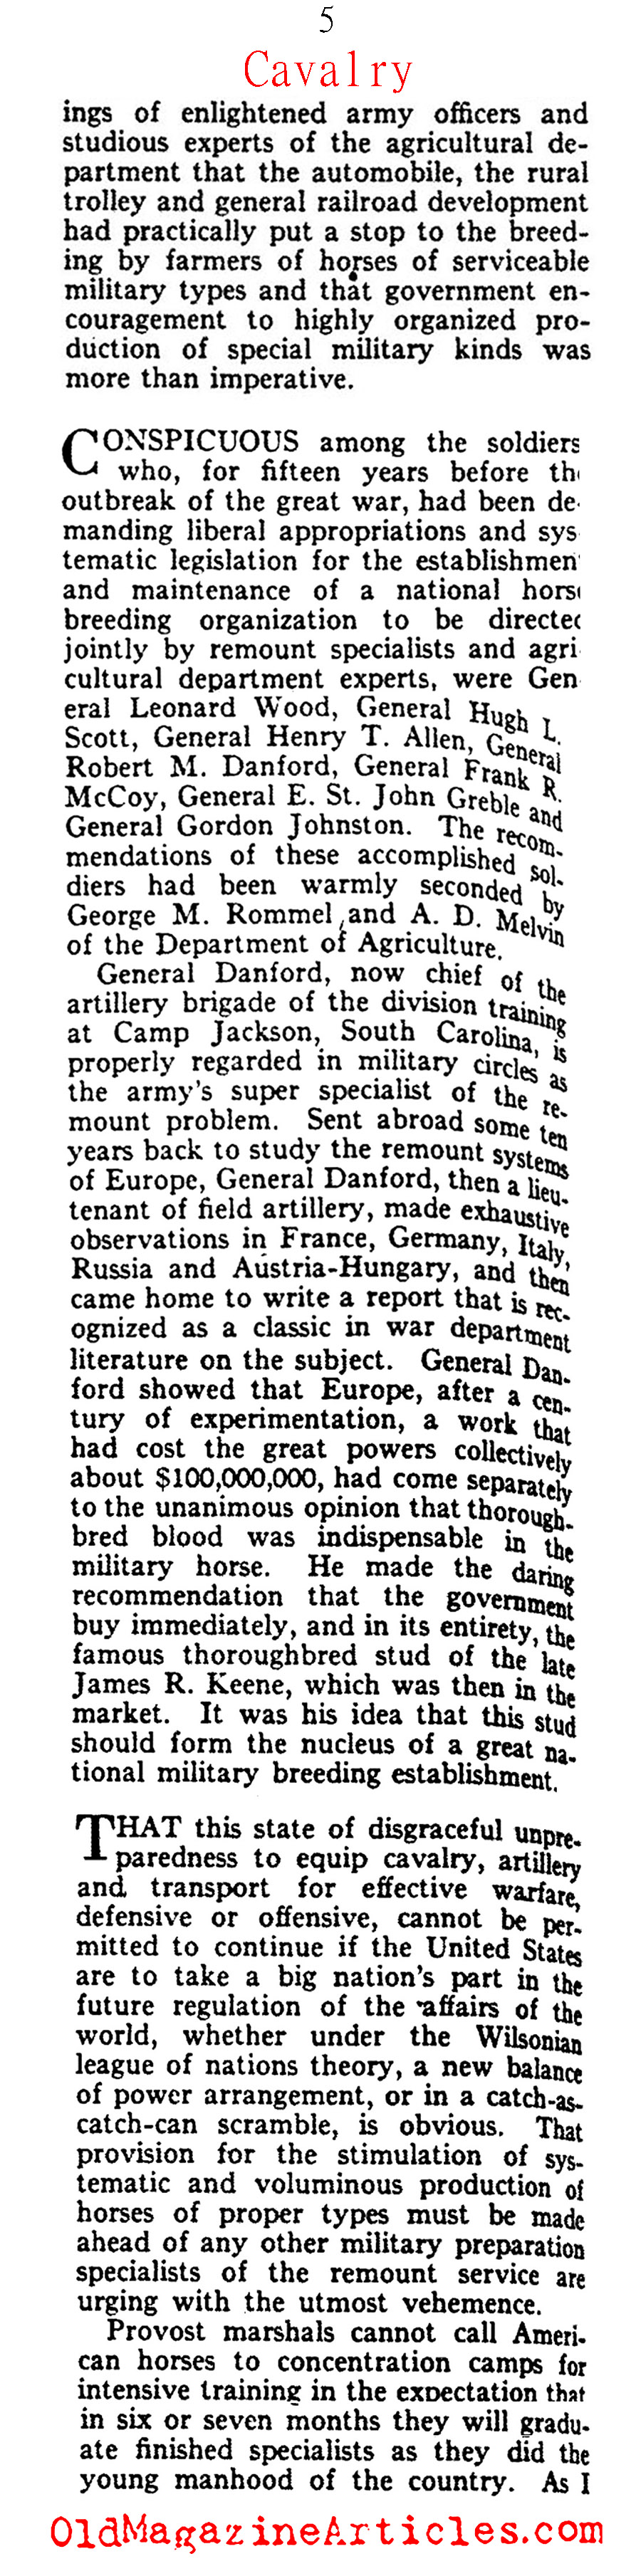 The Case for Cavalry (Vanity Fair Magazine, 1919)